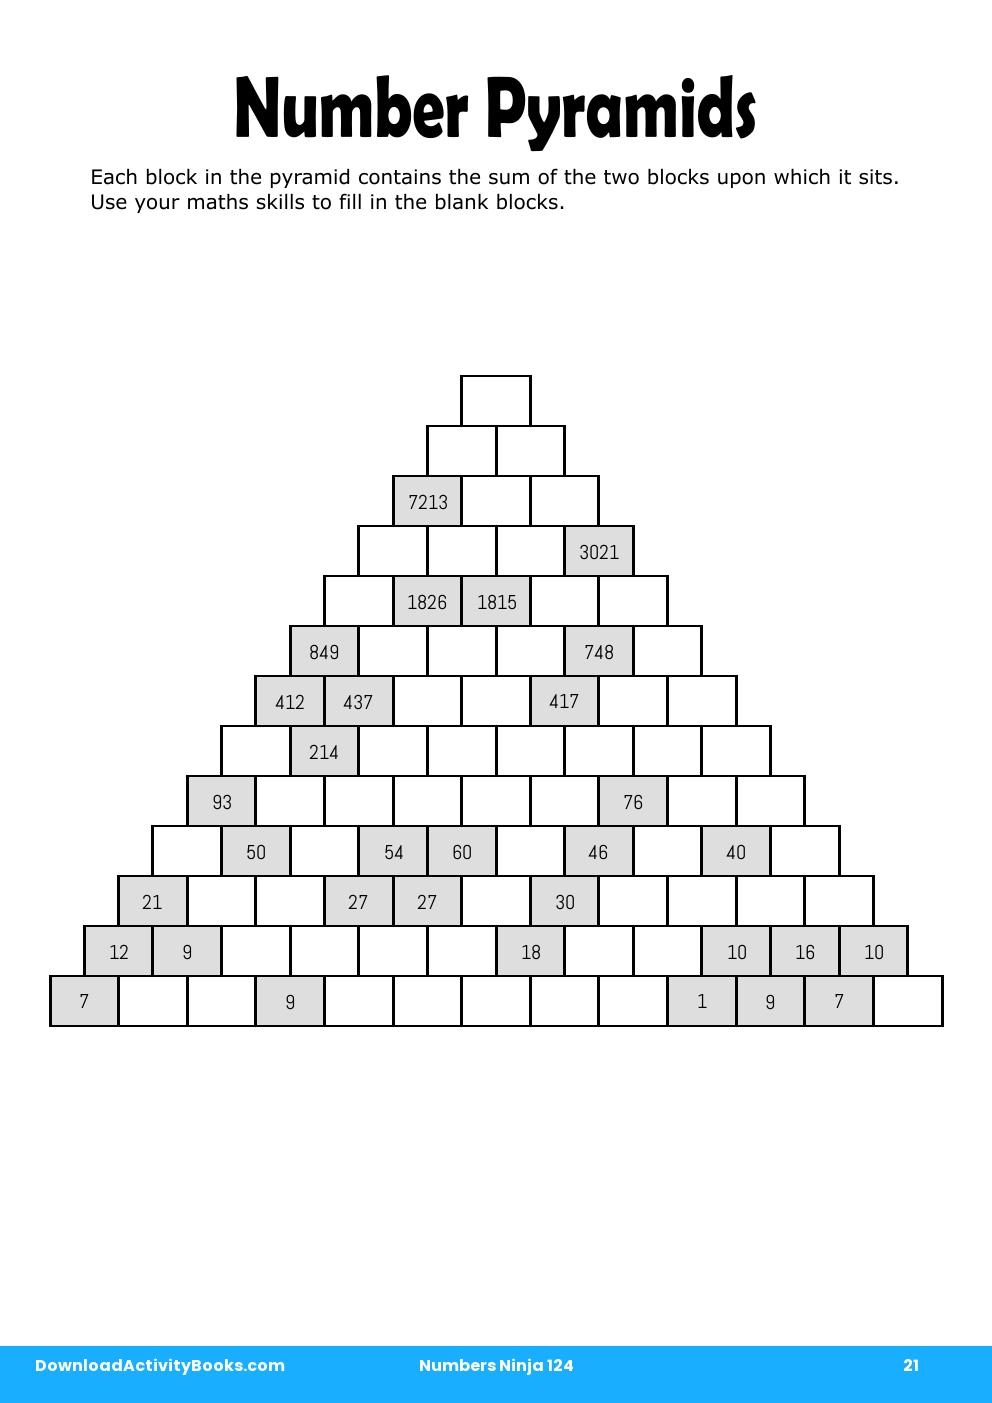 Number Pyramids in Numbers Ninja 124